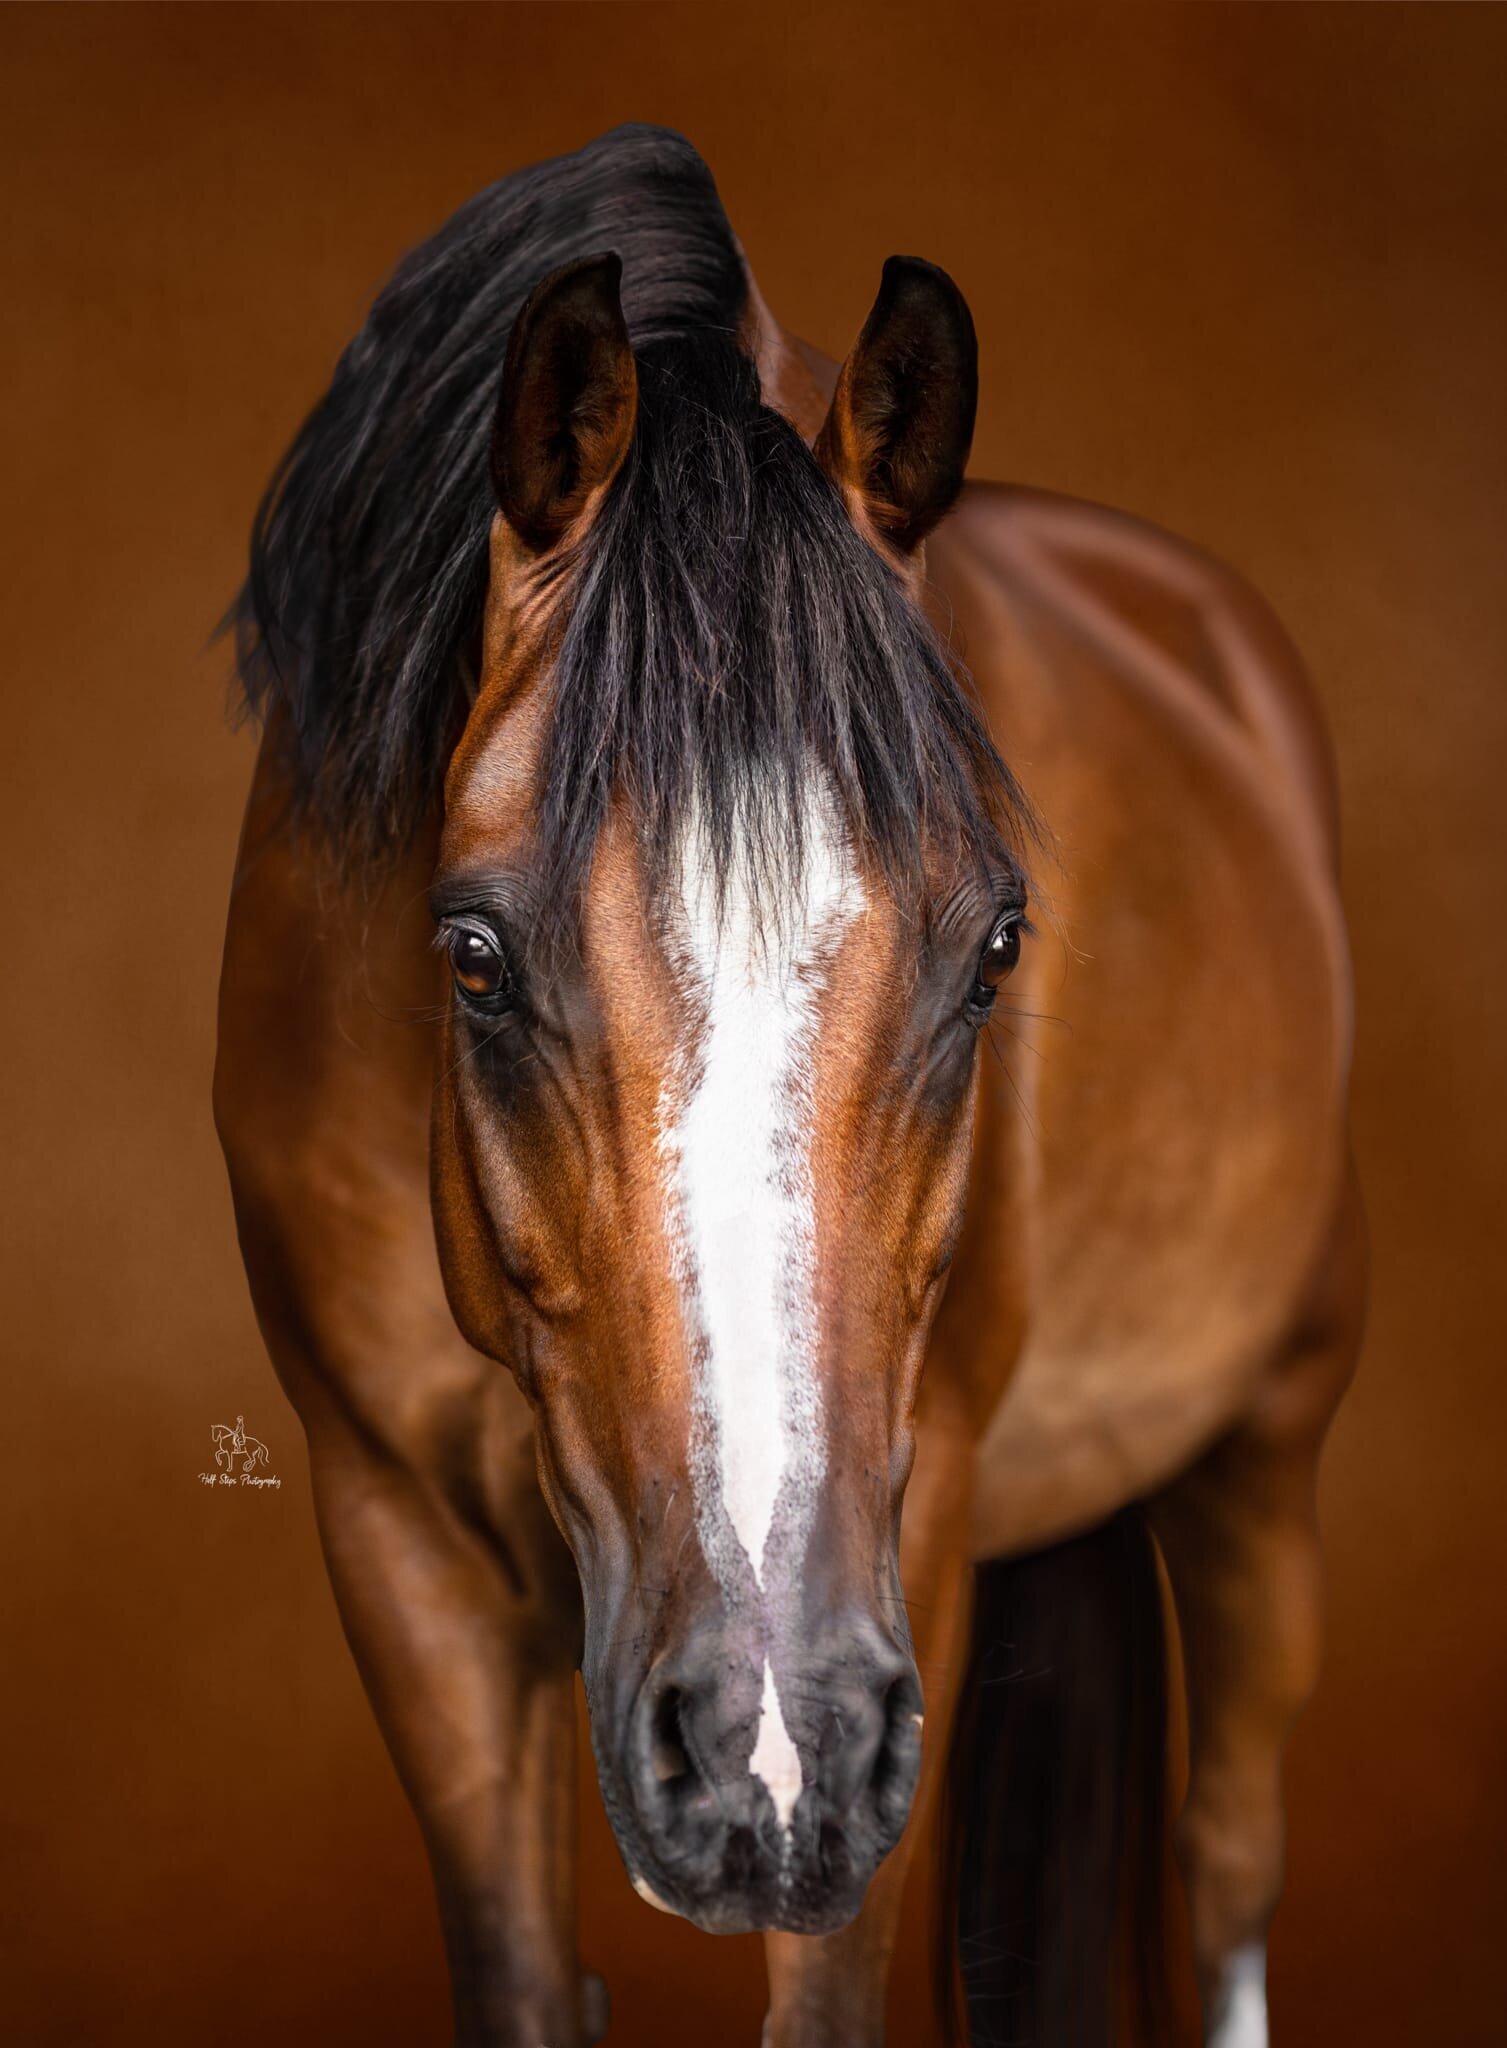 (51) Bay arabian horse portrait in the hawkesbury